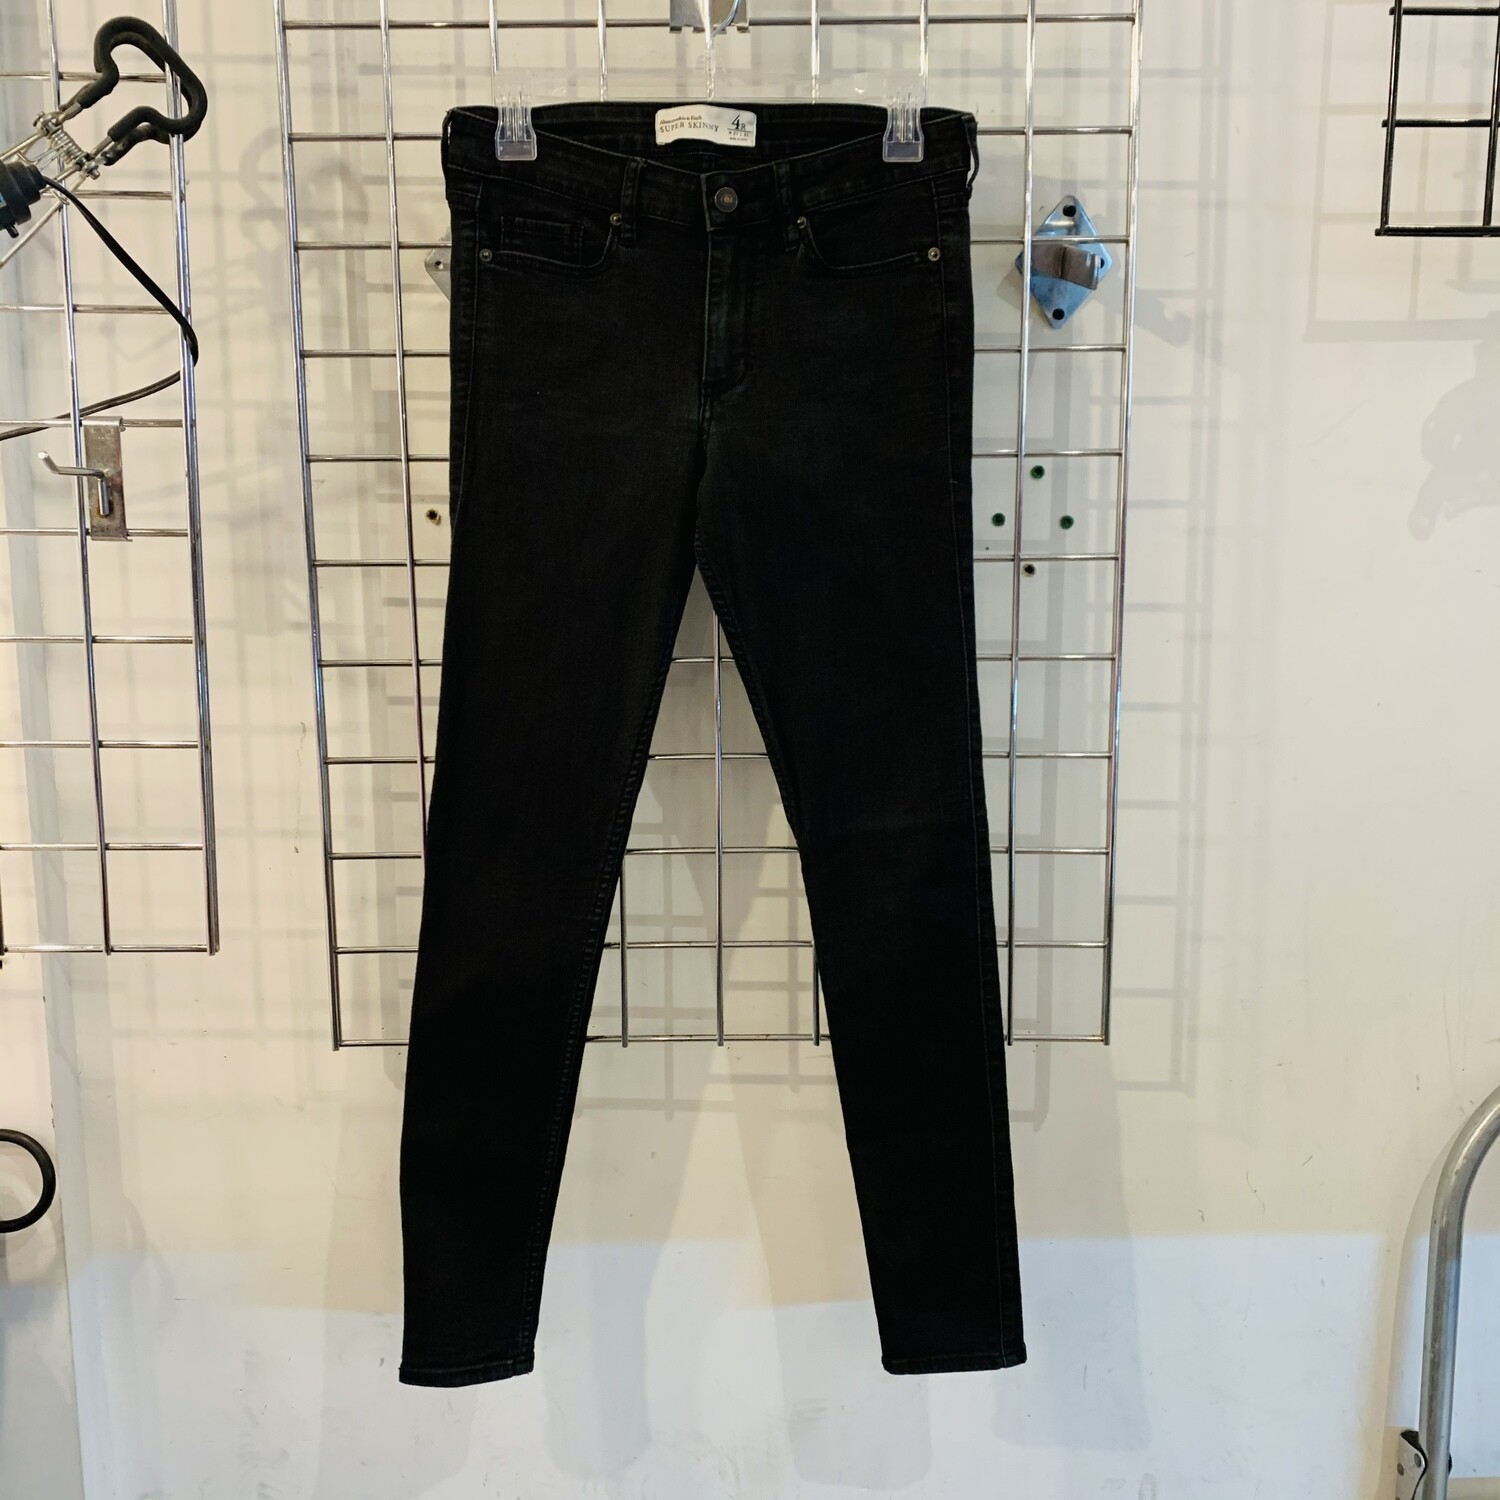 Size 4 Abercrombie & Fitch Super Skinny Jean